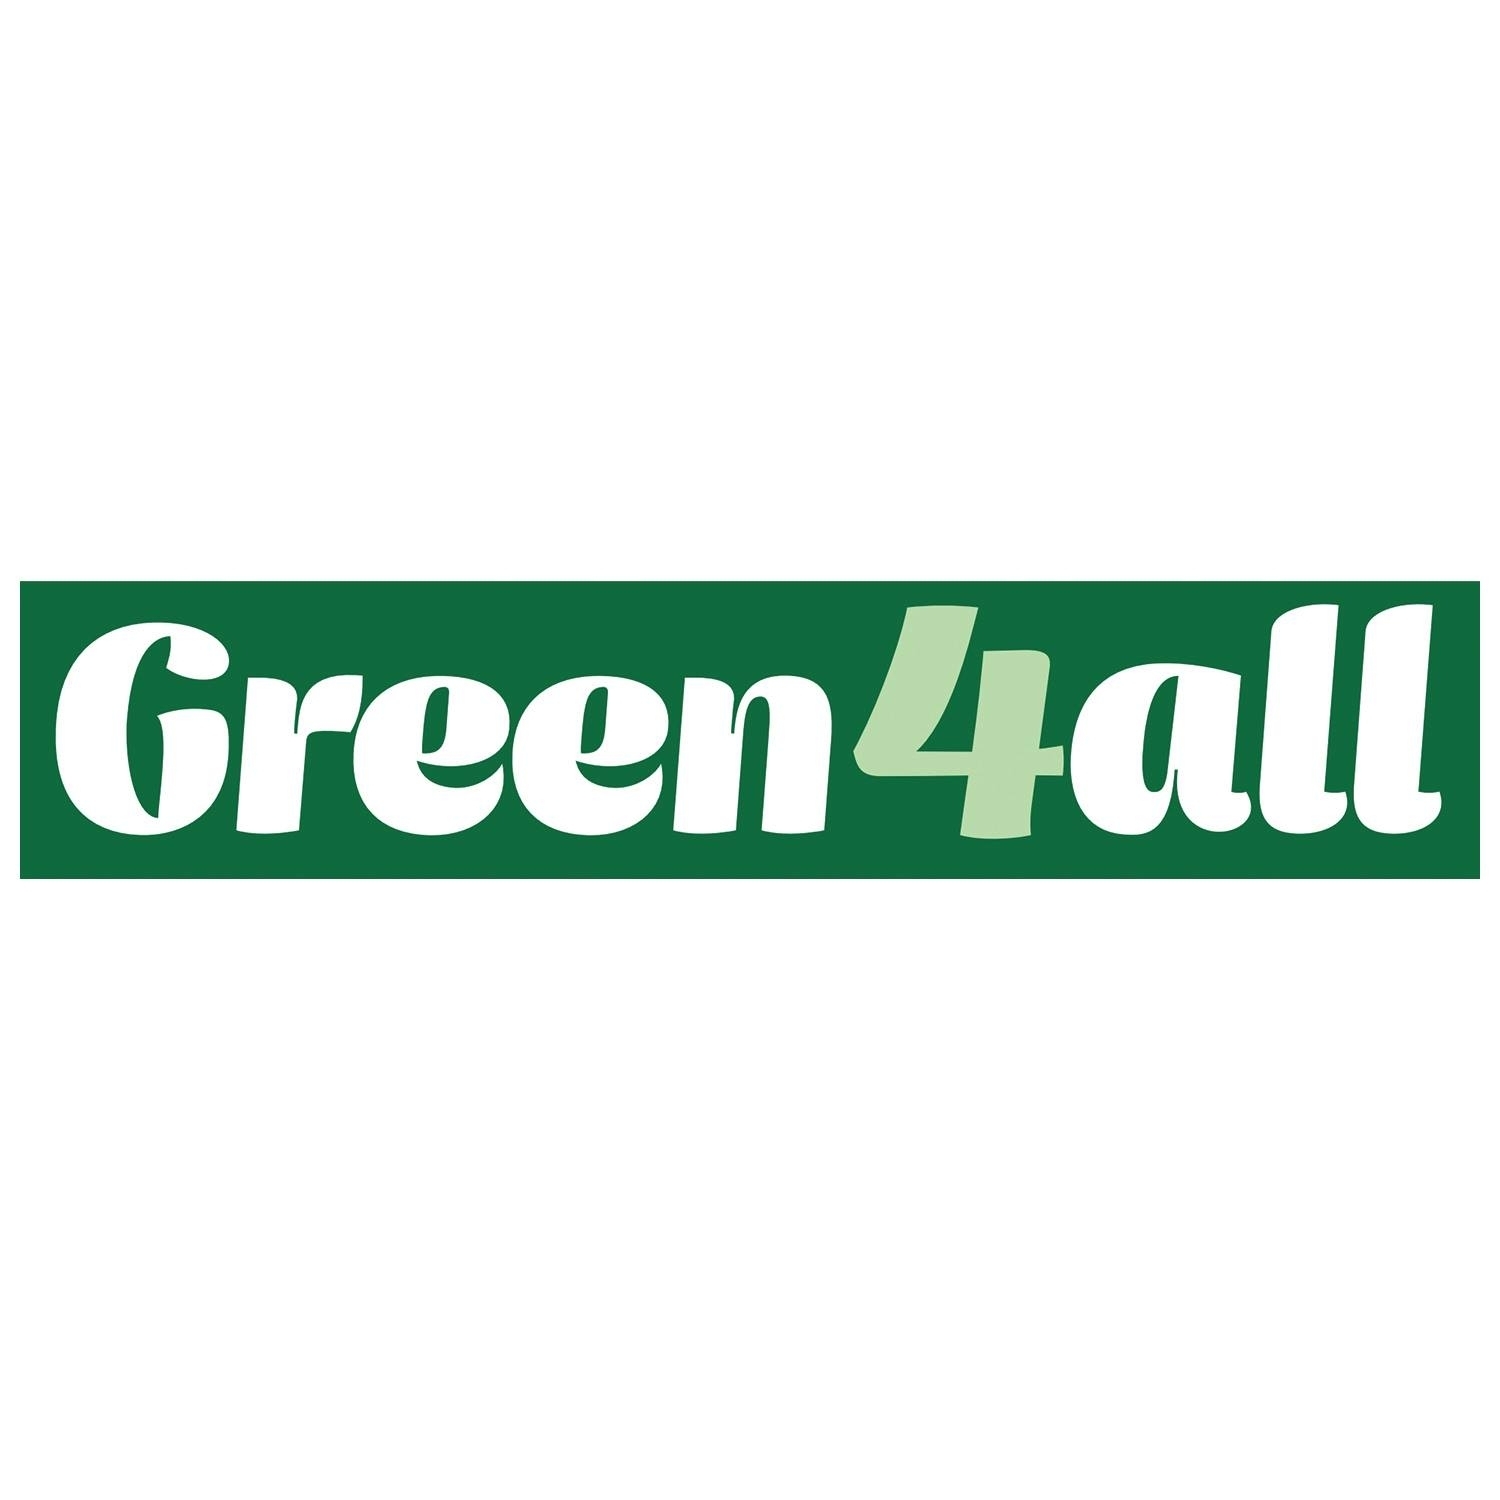 Green 4 All logo